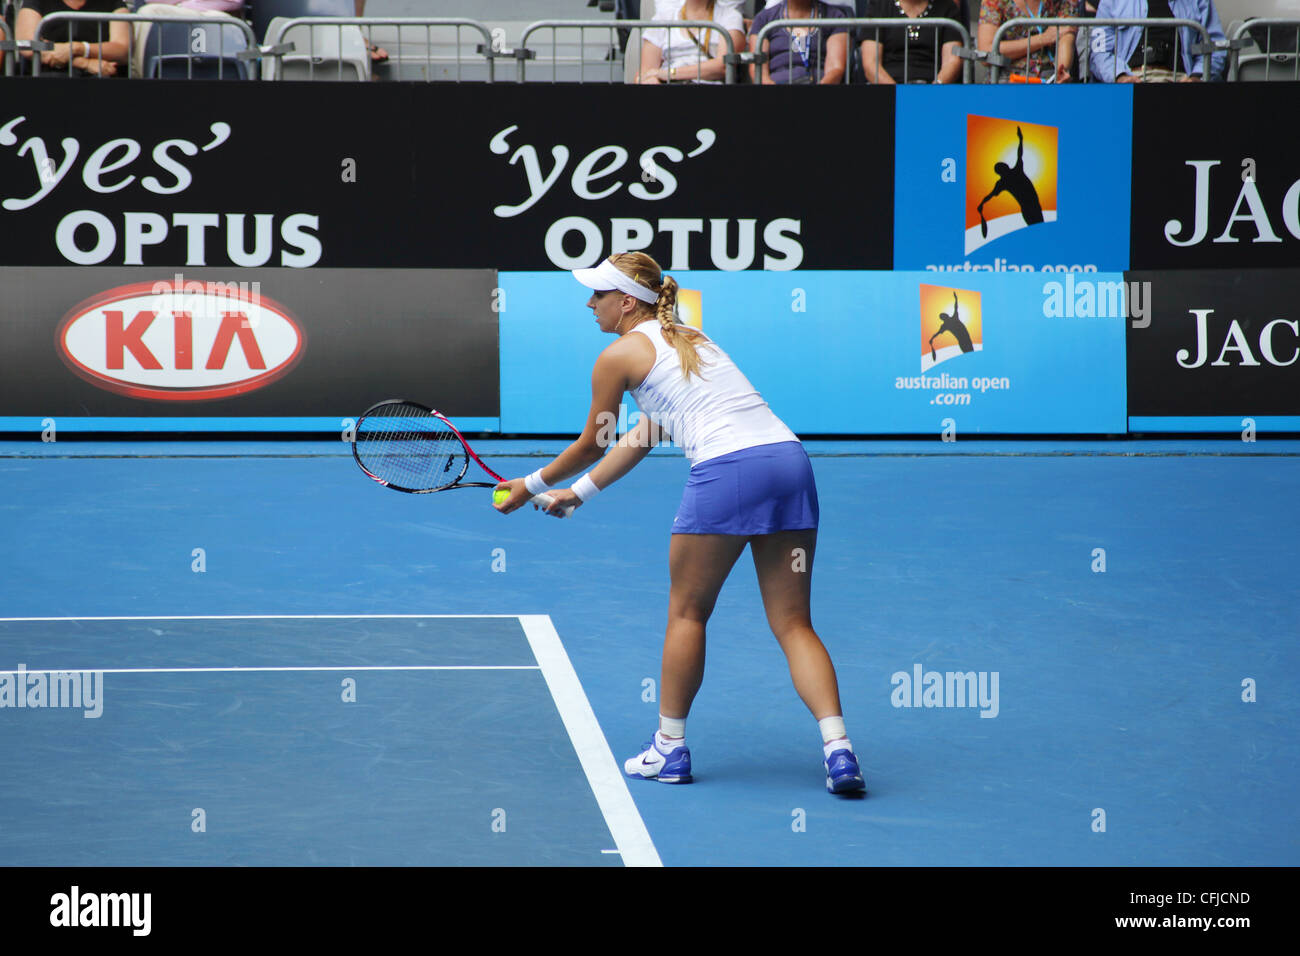 MELBOURNE, AUSTRALIA - JANUARY 21, 2012: WTA tennis player Sabine Lisicki prepares to serve to Svetlana Kuznetsova. Stock Photo